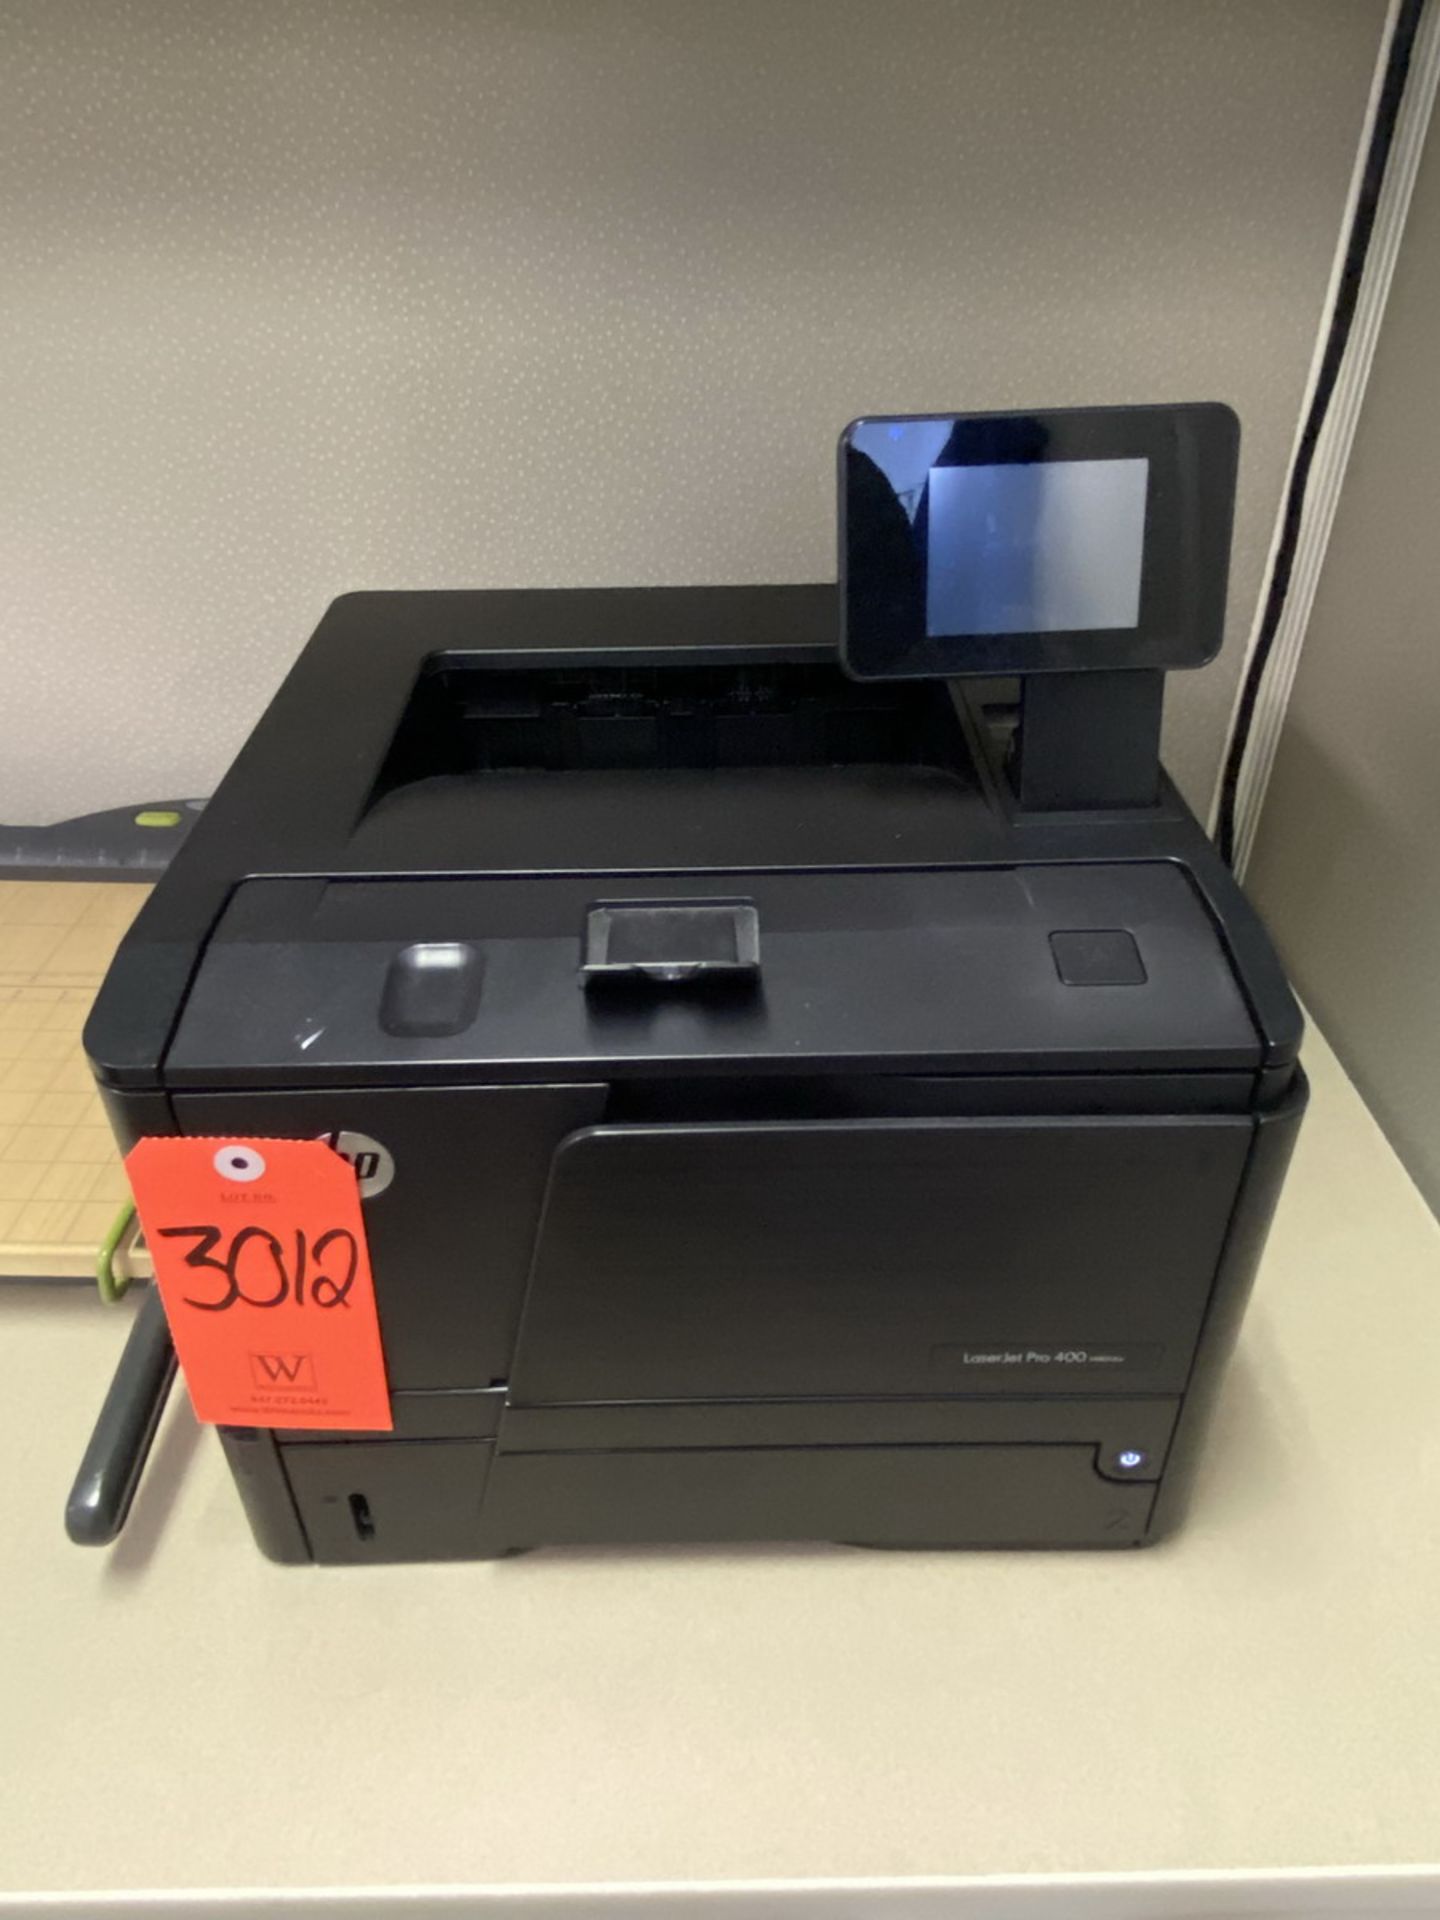 Hewlett-Packard LaserJet Pro 400 M401dw Printer (Delayed Removal - Cannot Begin Removal Until 4/23/